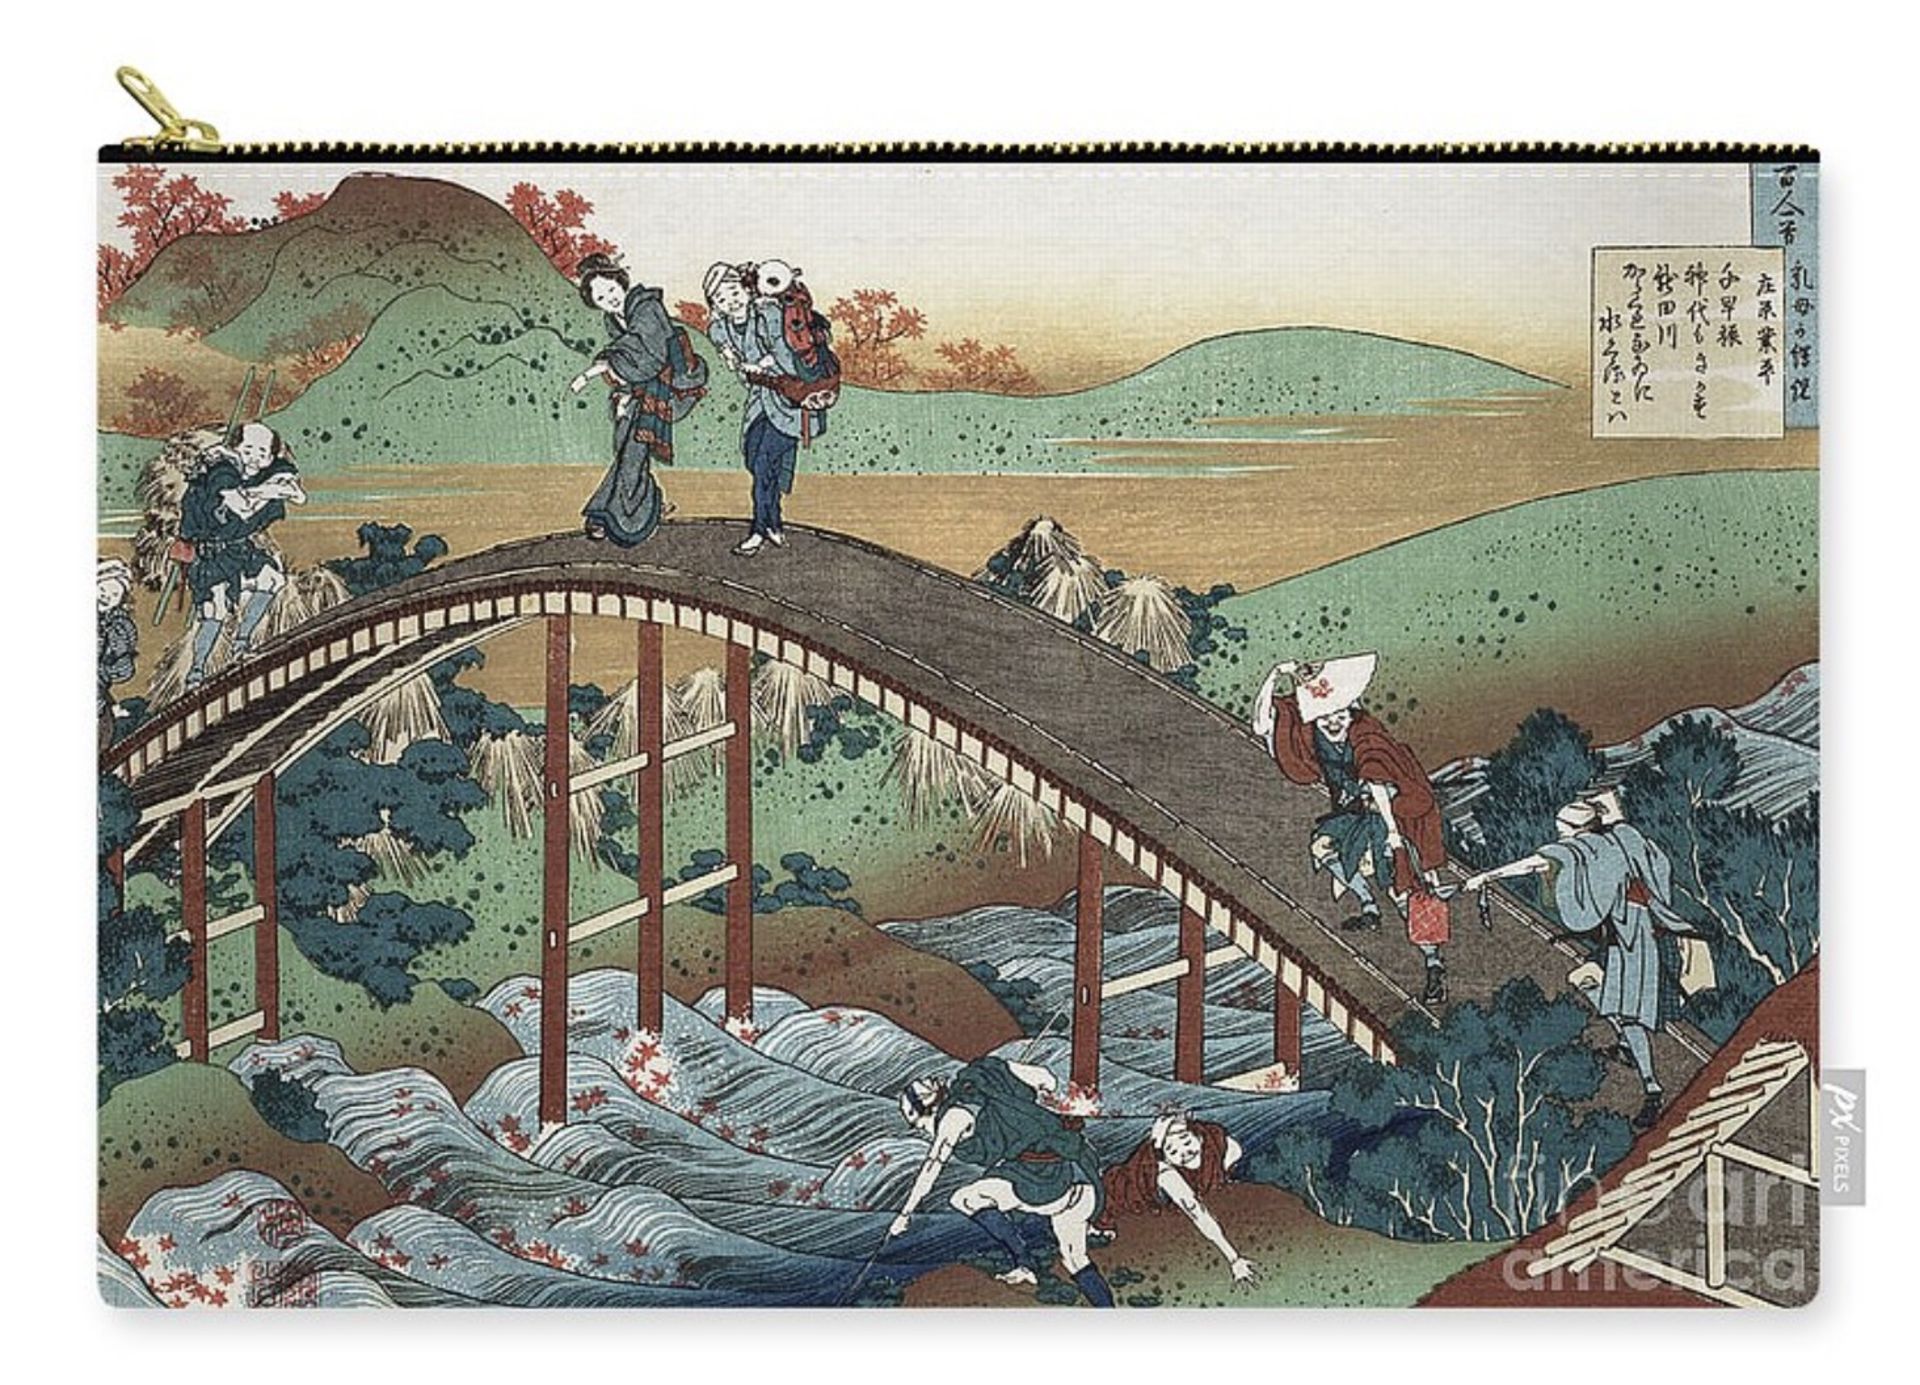 Katsushika Hokusai "Autumn Leaves" Pouch